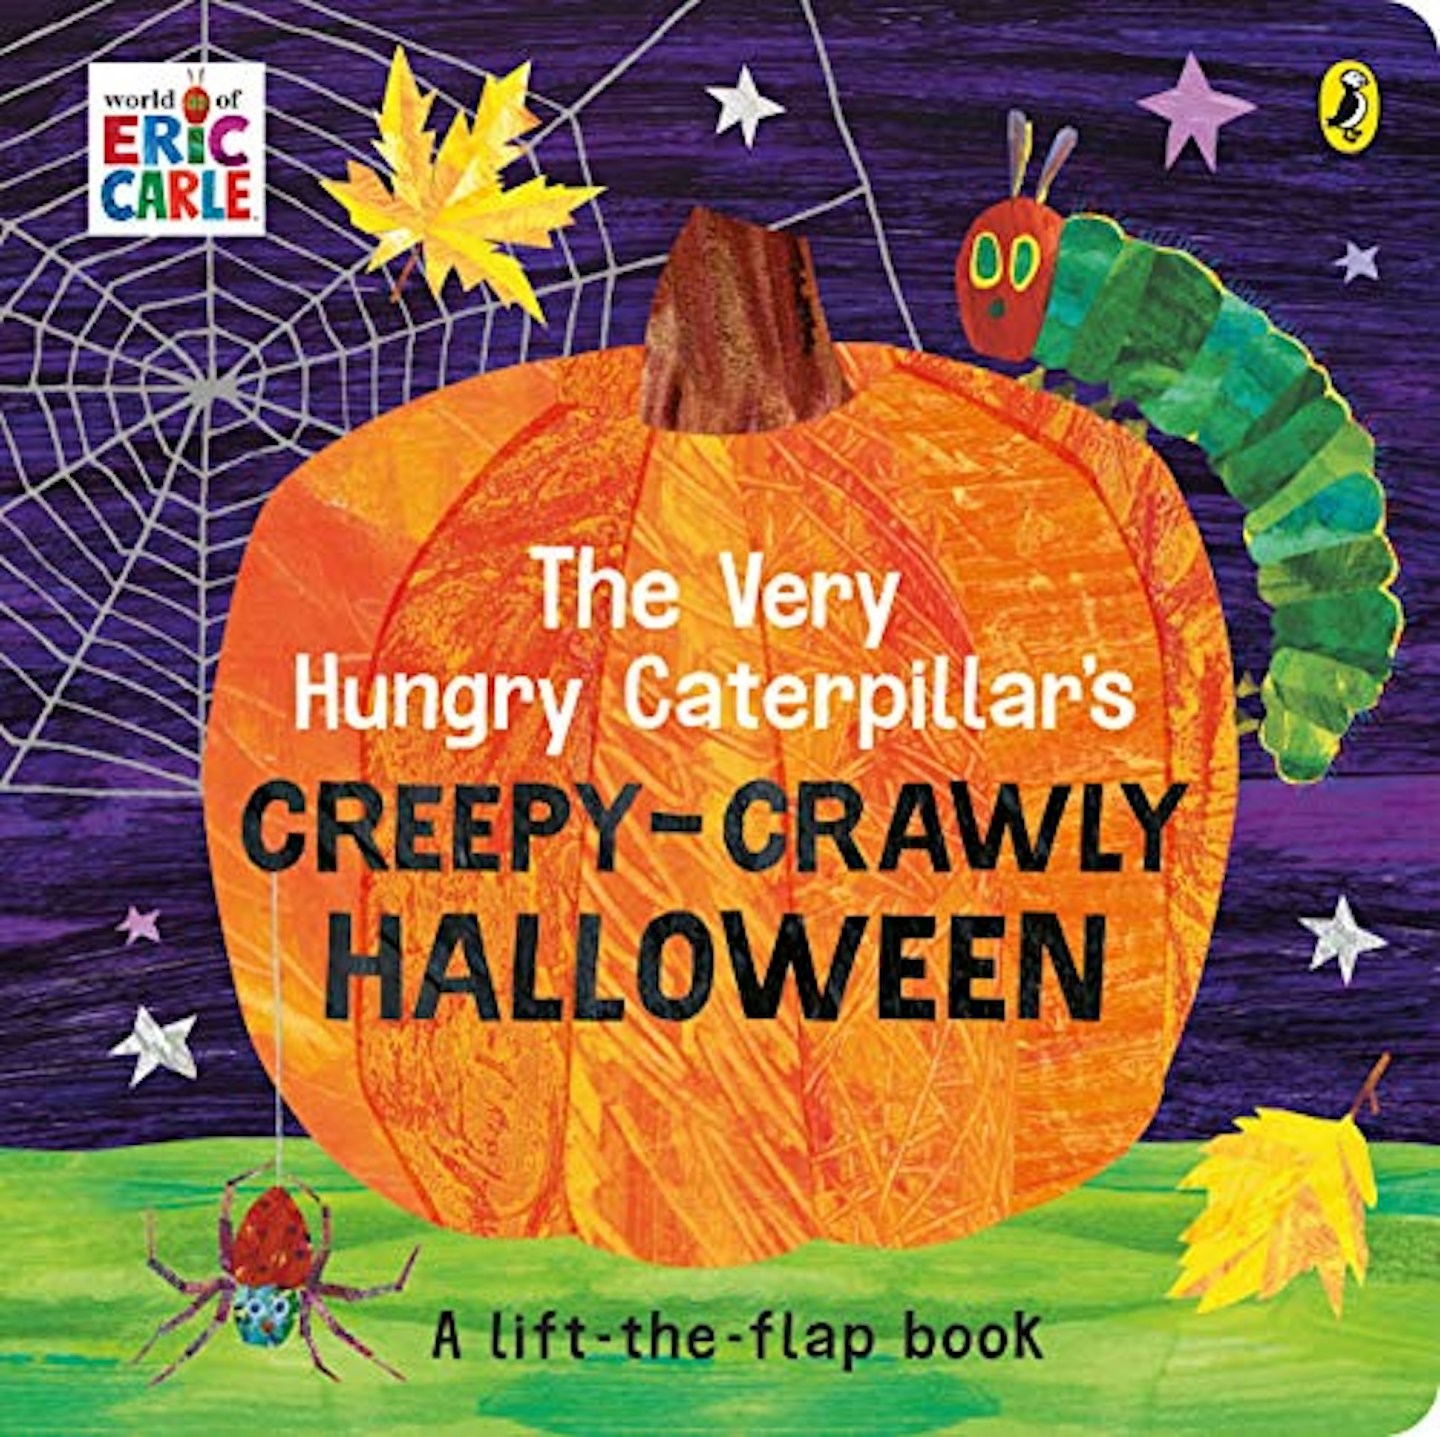 The Very Hungry Caterpillaru2019s Creepy-Crawly Halloween